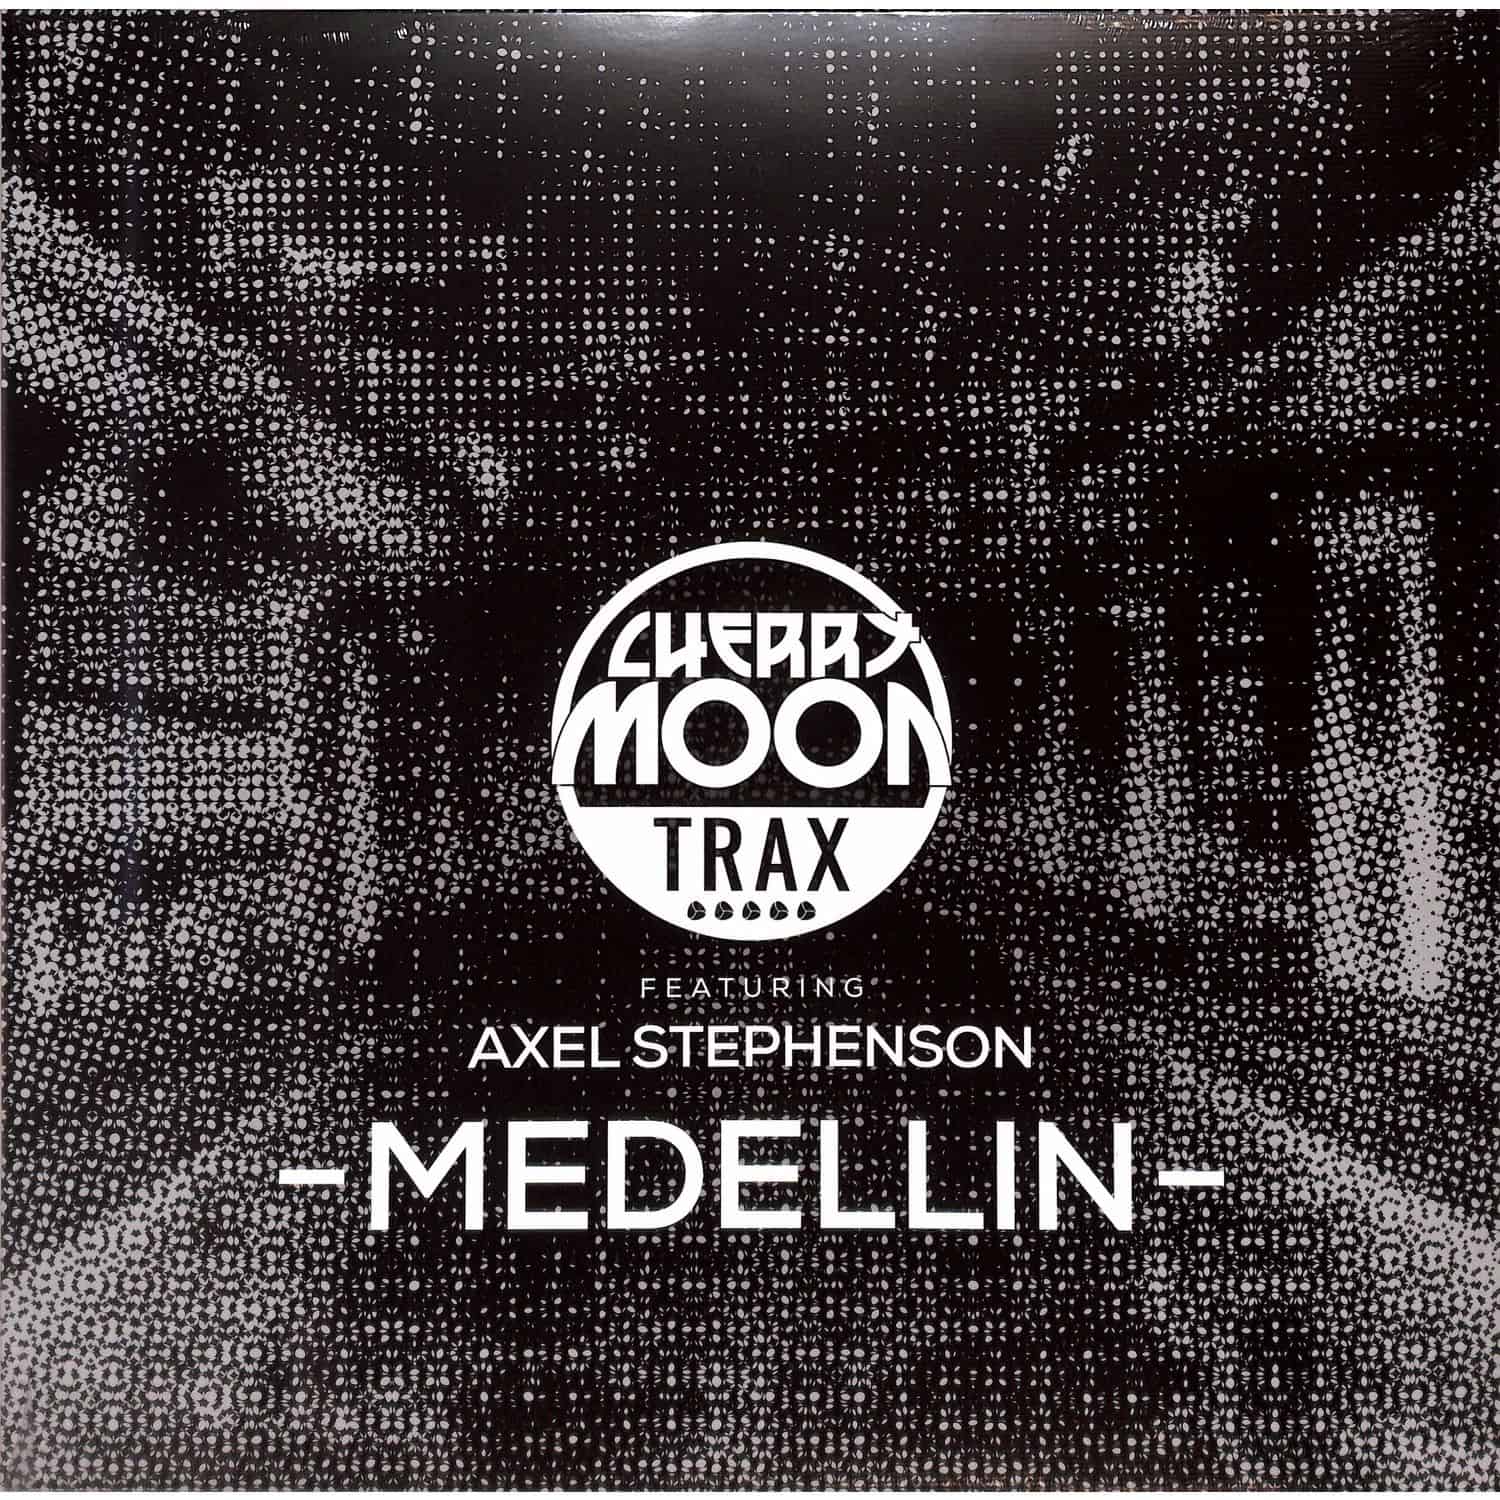 Cherry Moon Trax featuring Axel Stephenson - MEDELLIN